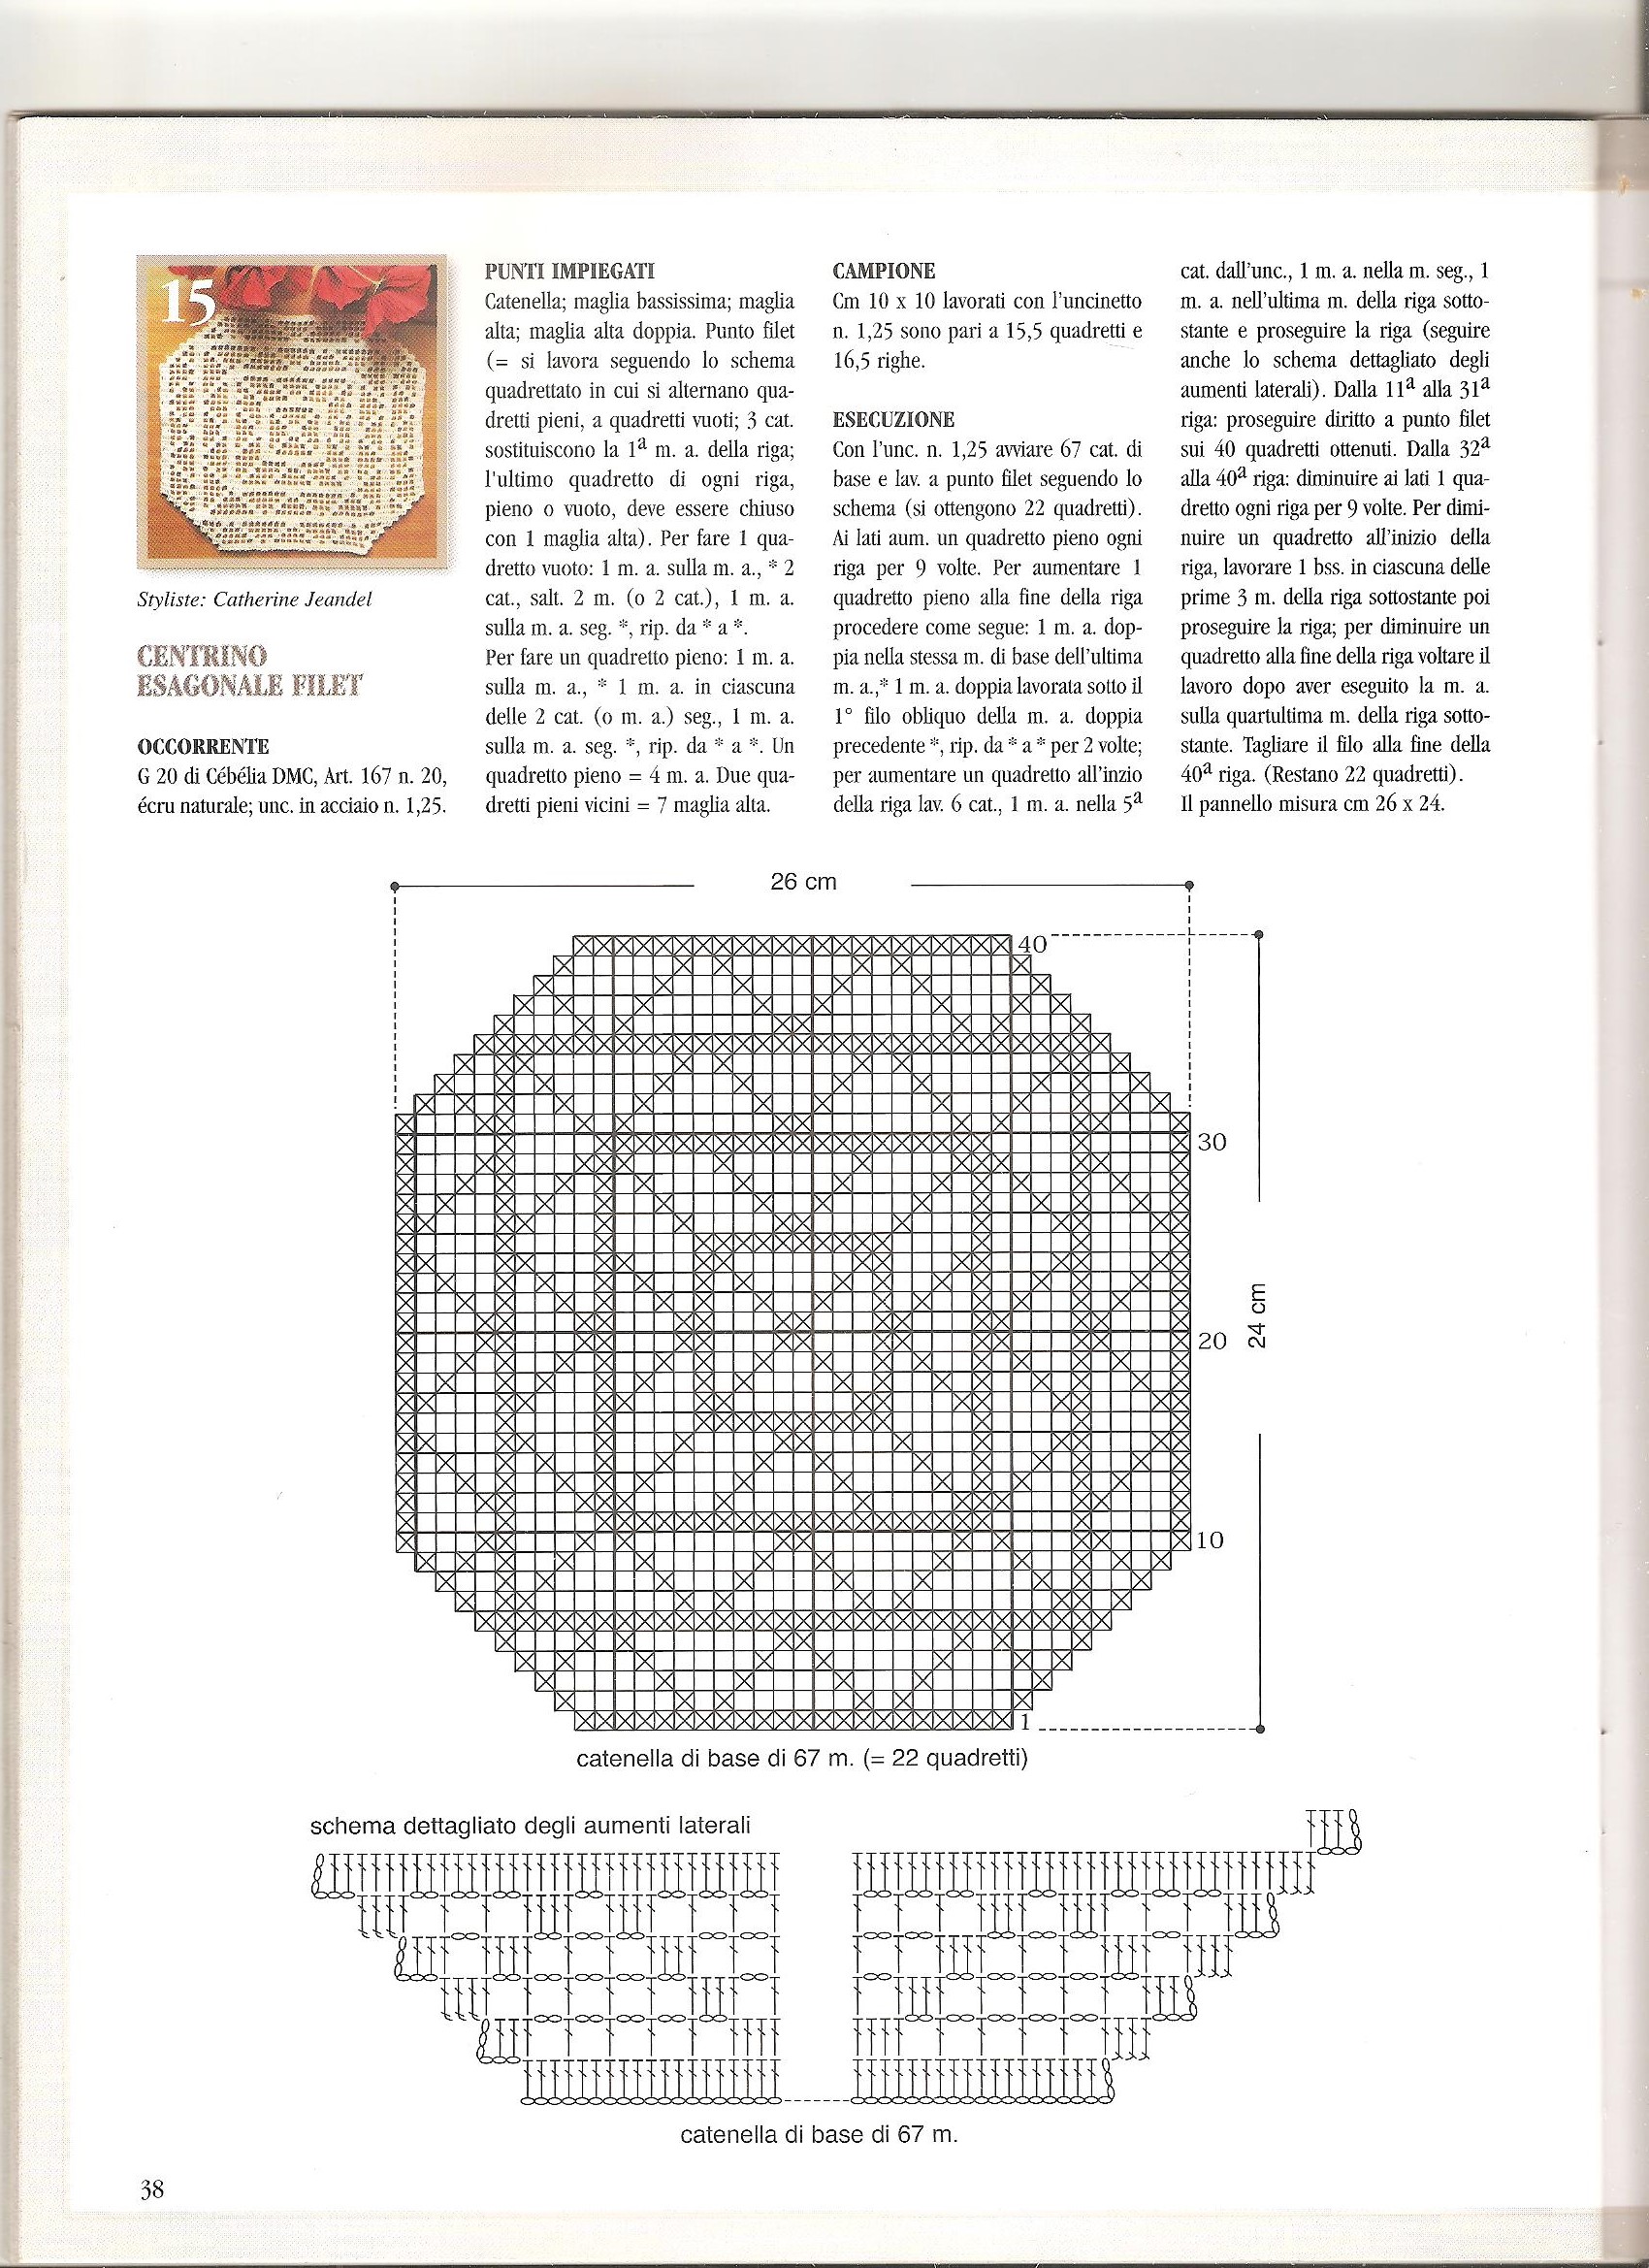 hexagonal doily filet (2)